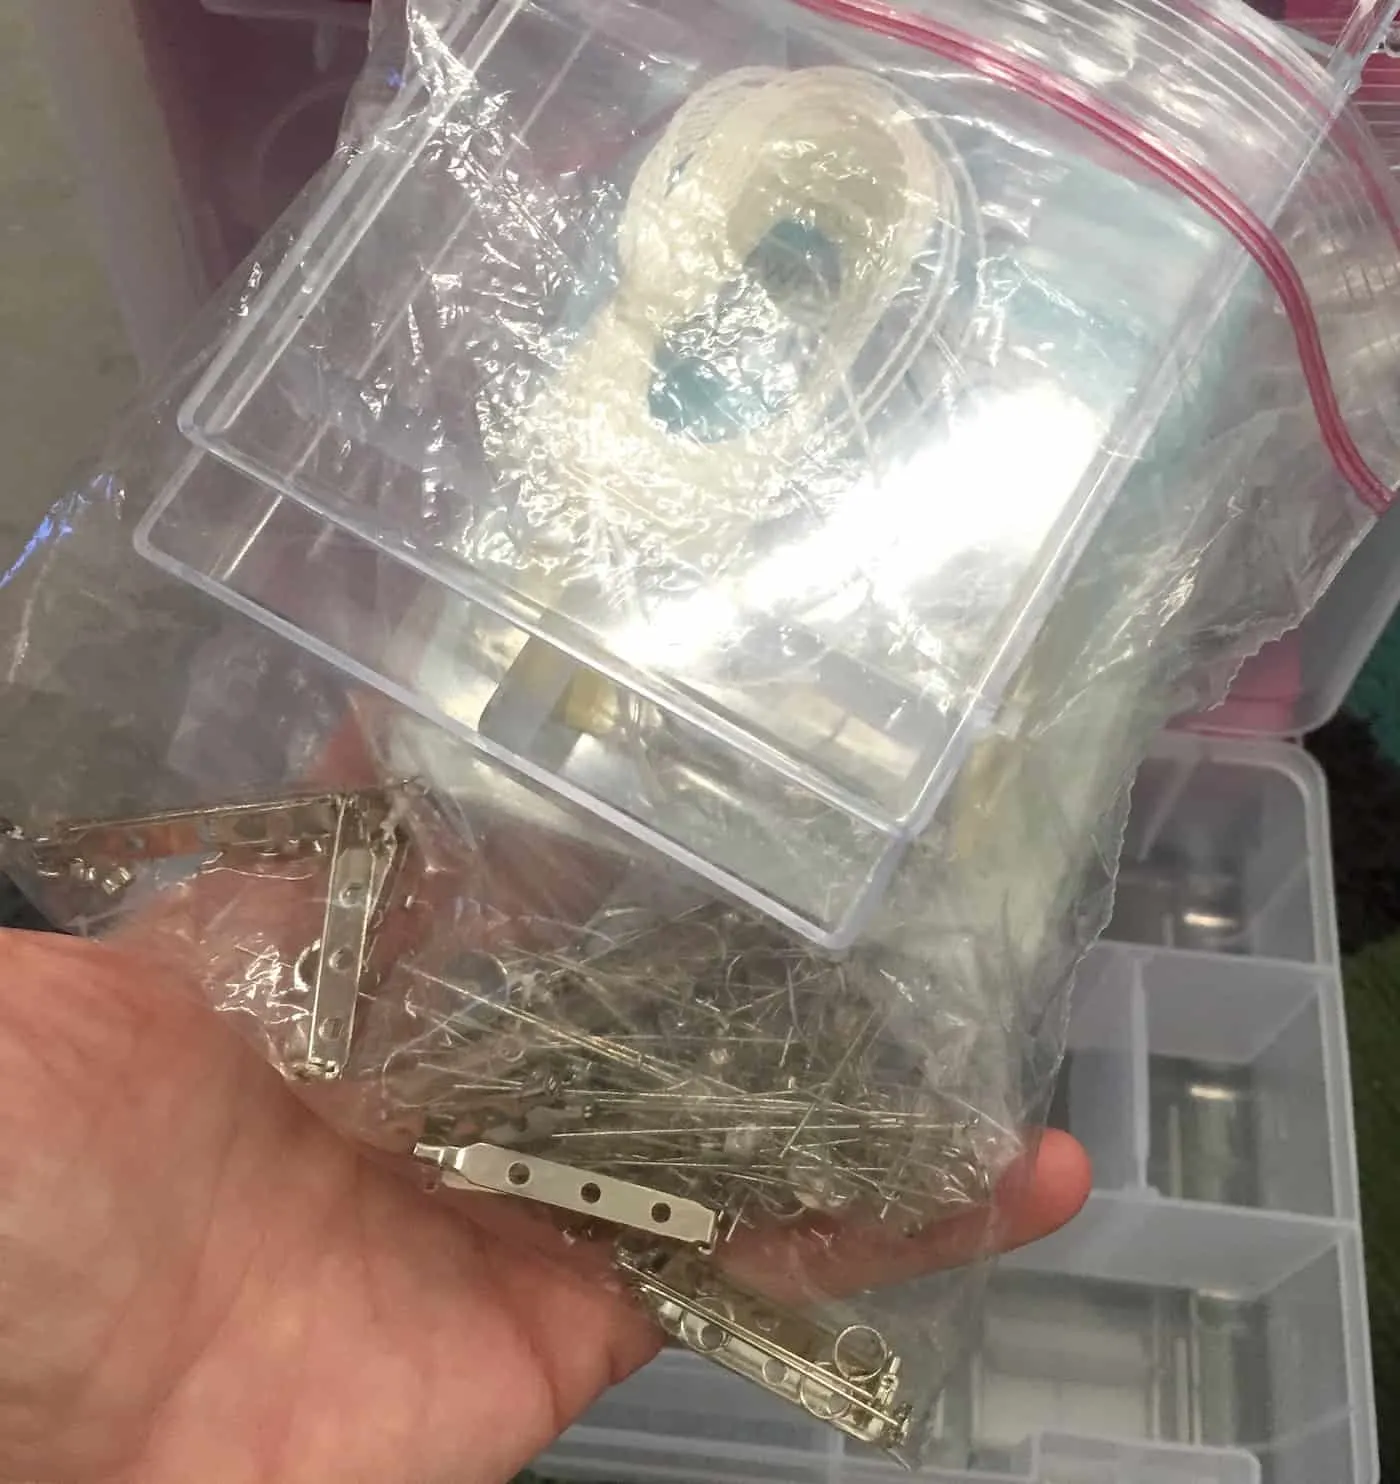 Random metal jewelry findings in a clear plastic bag